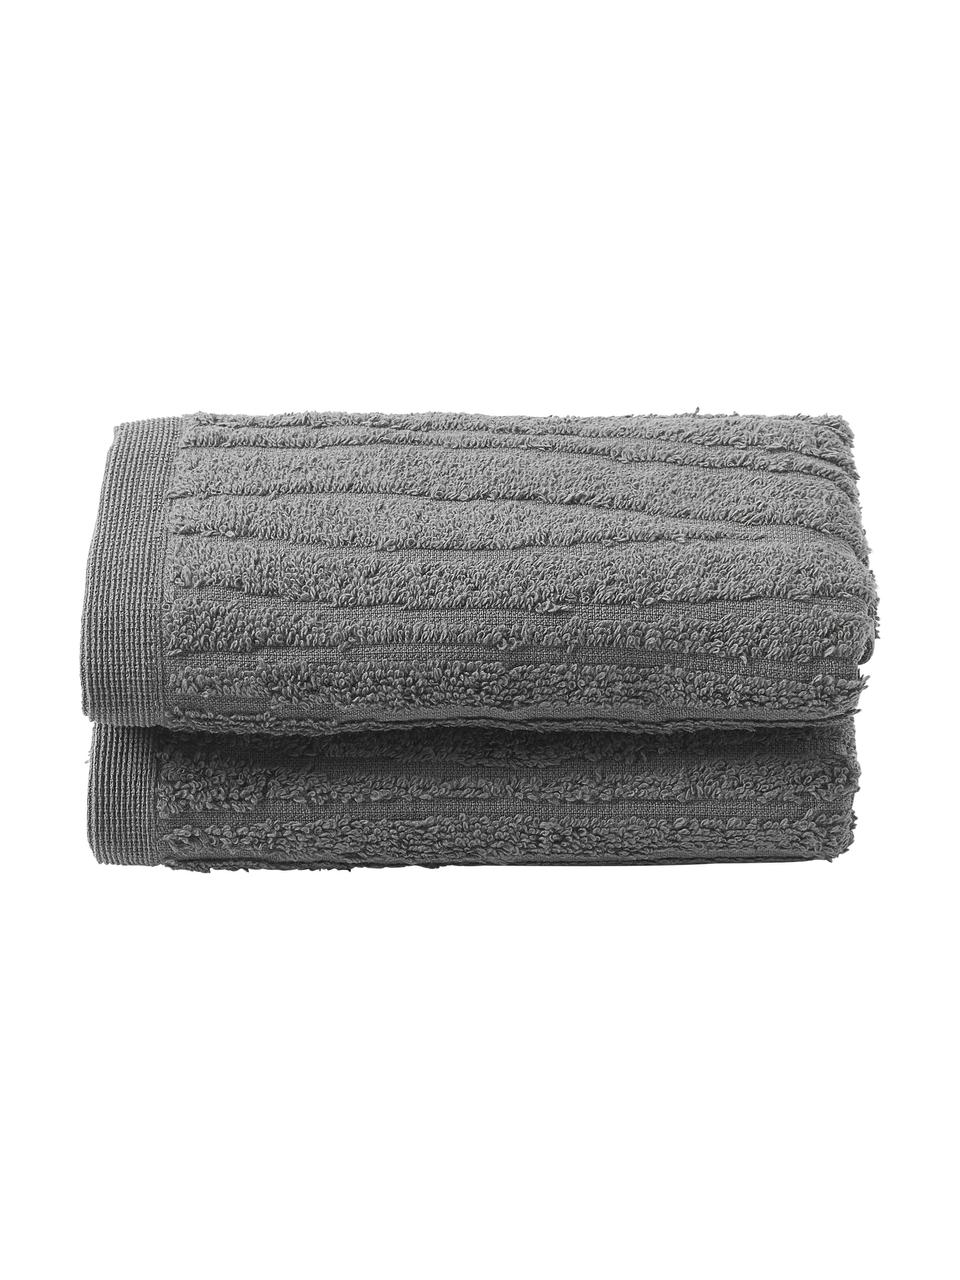 Asciugamano in cotone Audrina 2 pz, Grigio scuro, Asciugamani ospiti XS, larg. 30 x lung. 50 cm